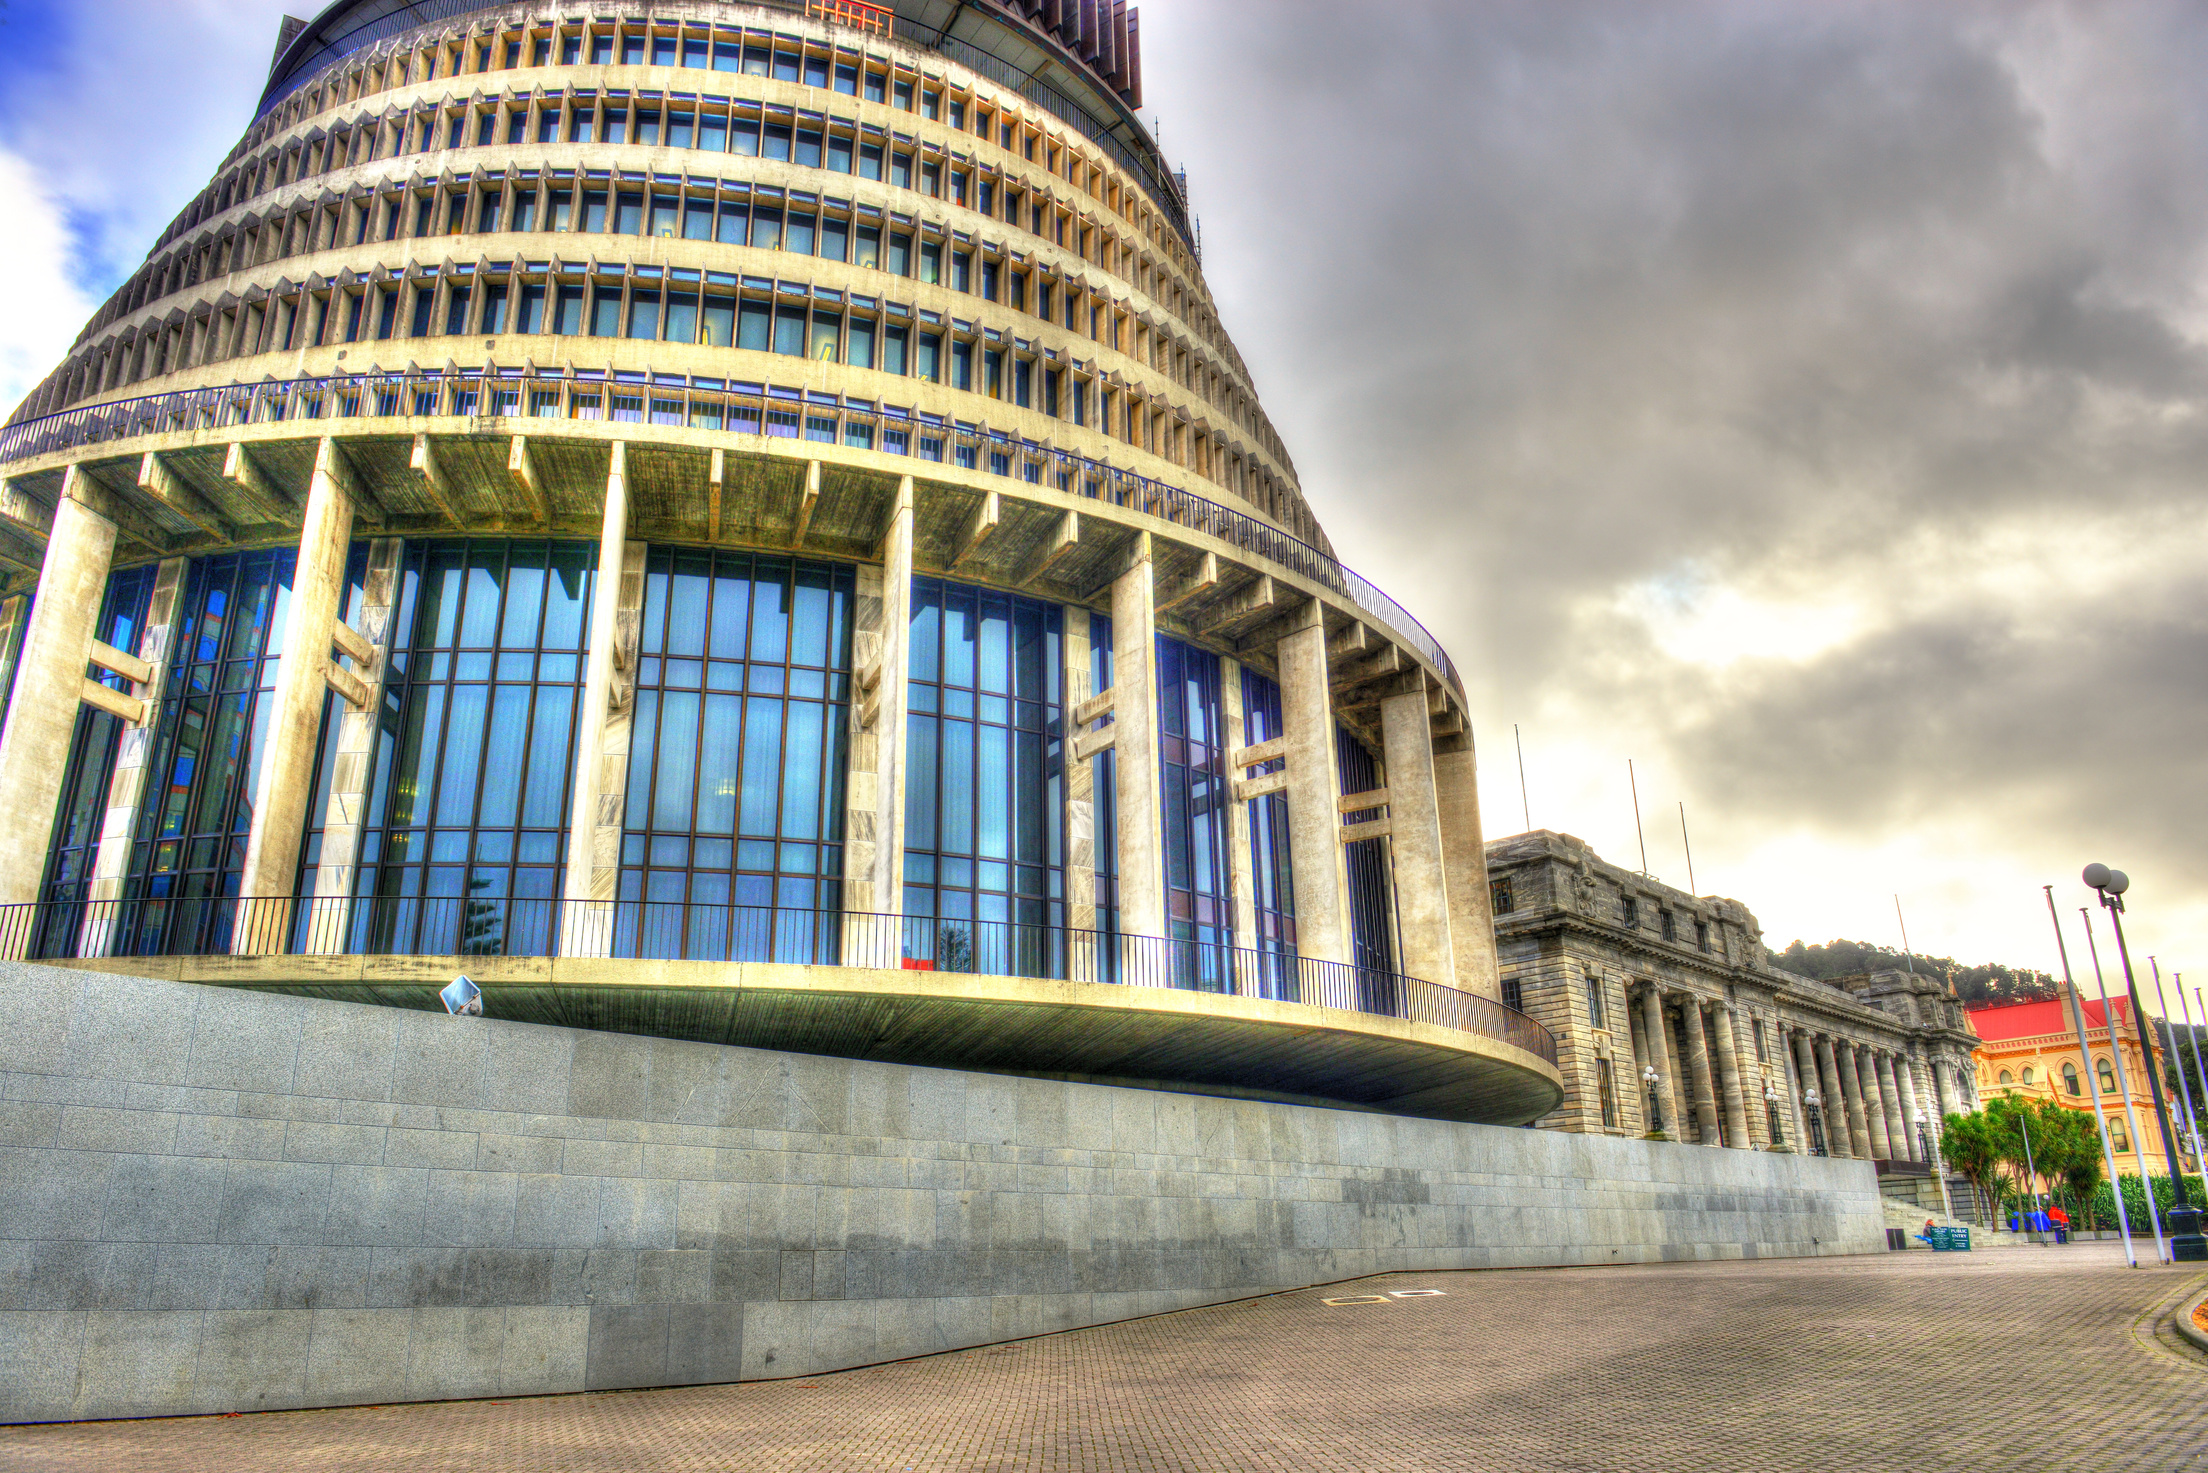 Parliamentary Services
Parliament